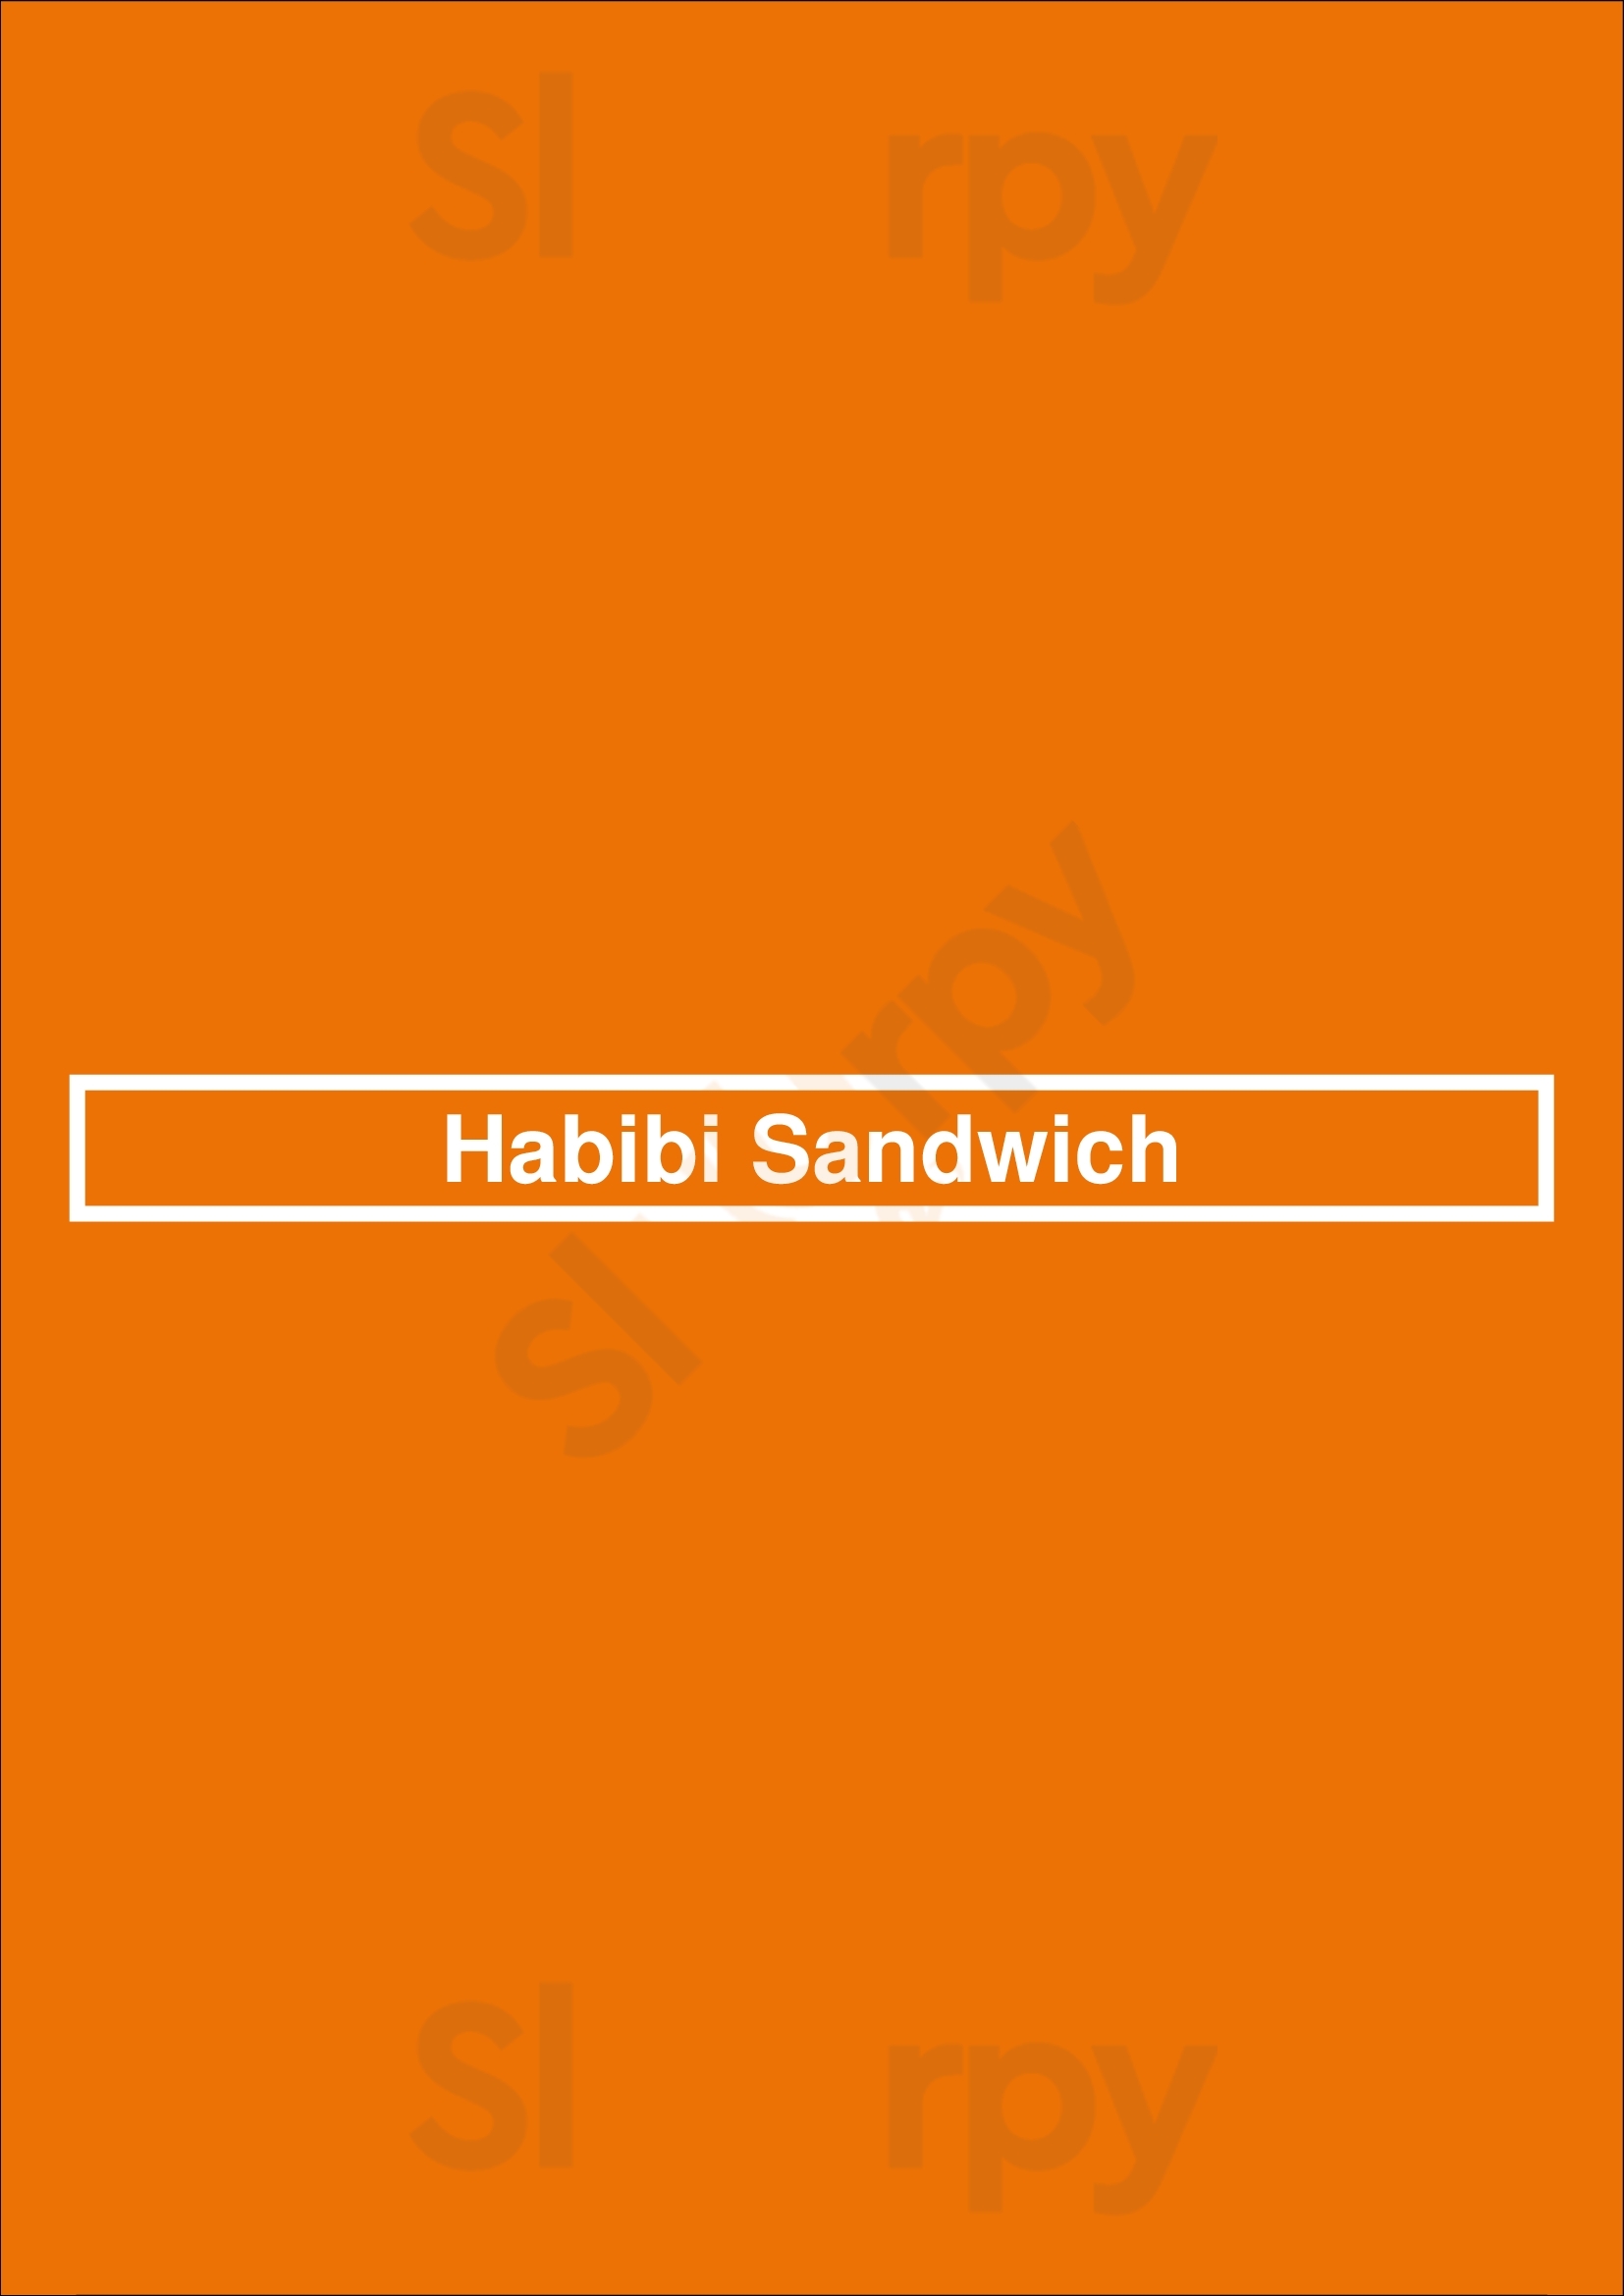 Habibi Sandwich Portland Menu - 1